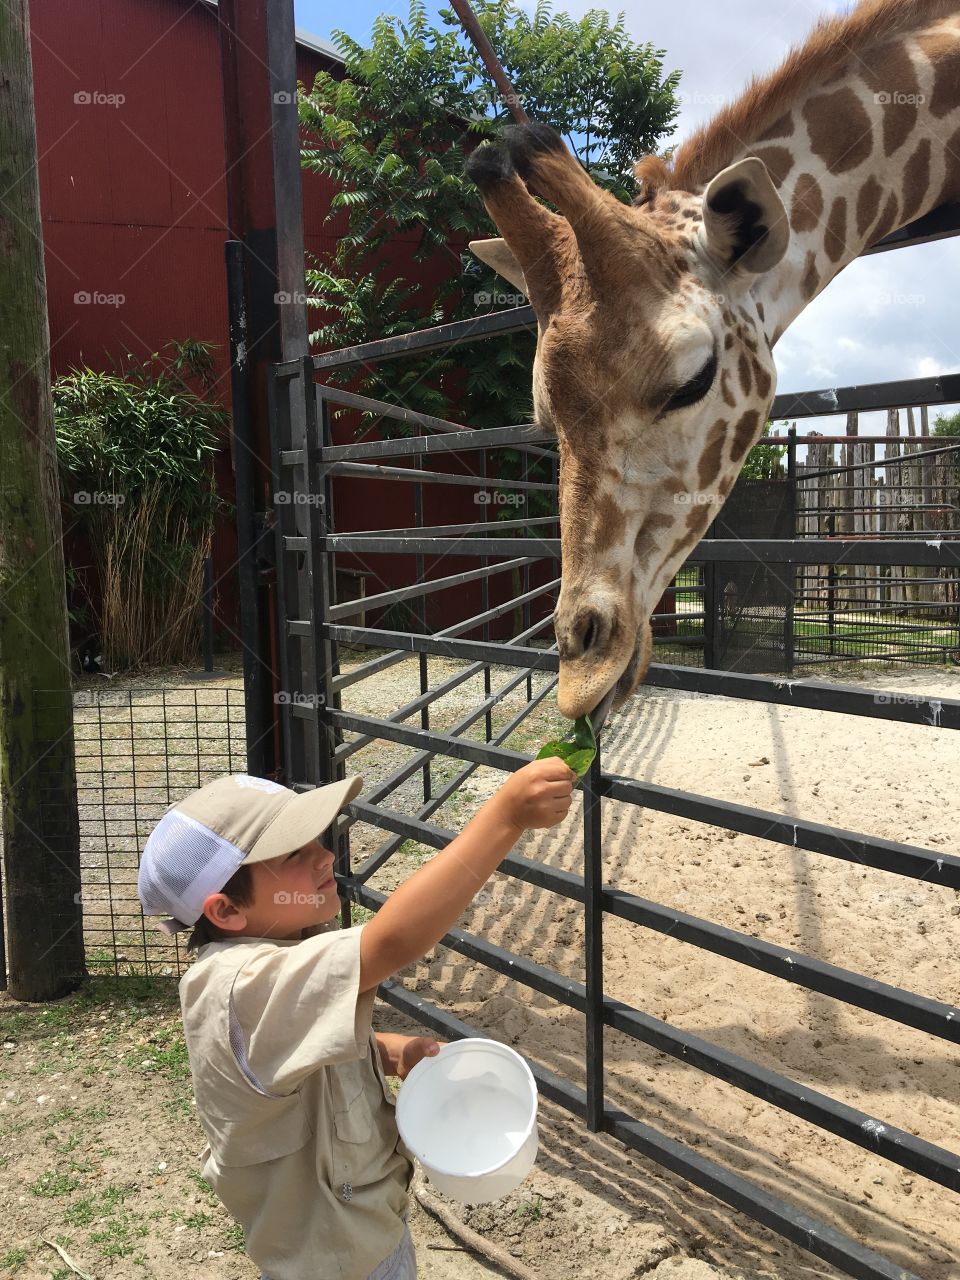 Jackson the giraffe 